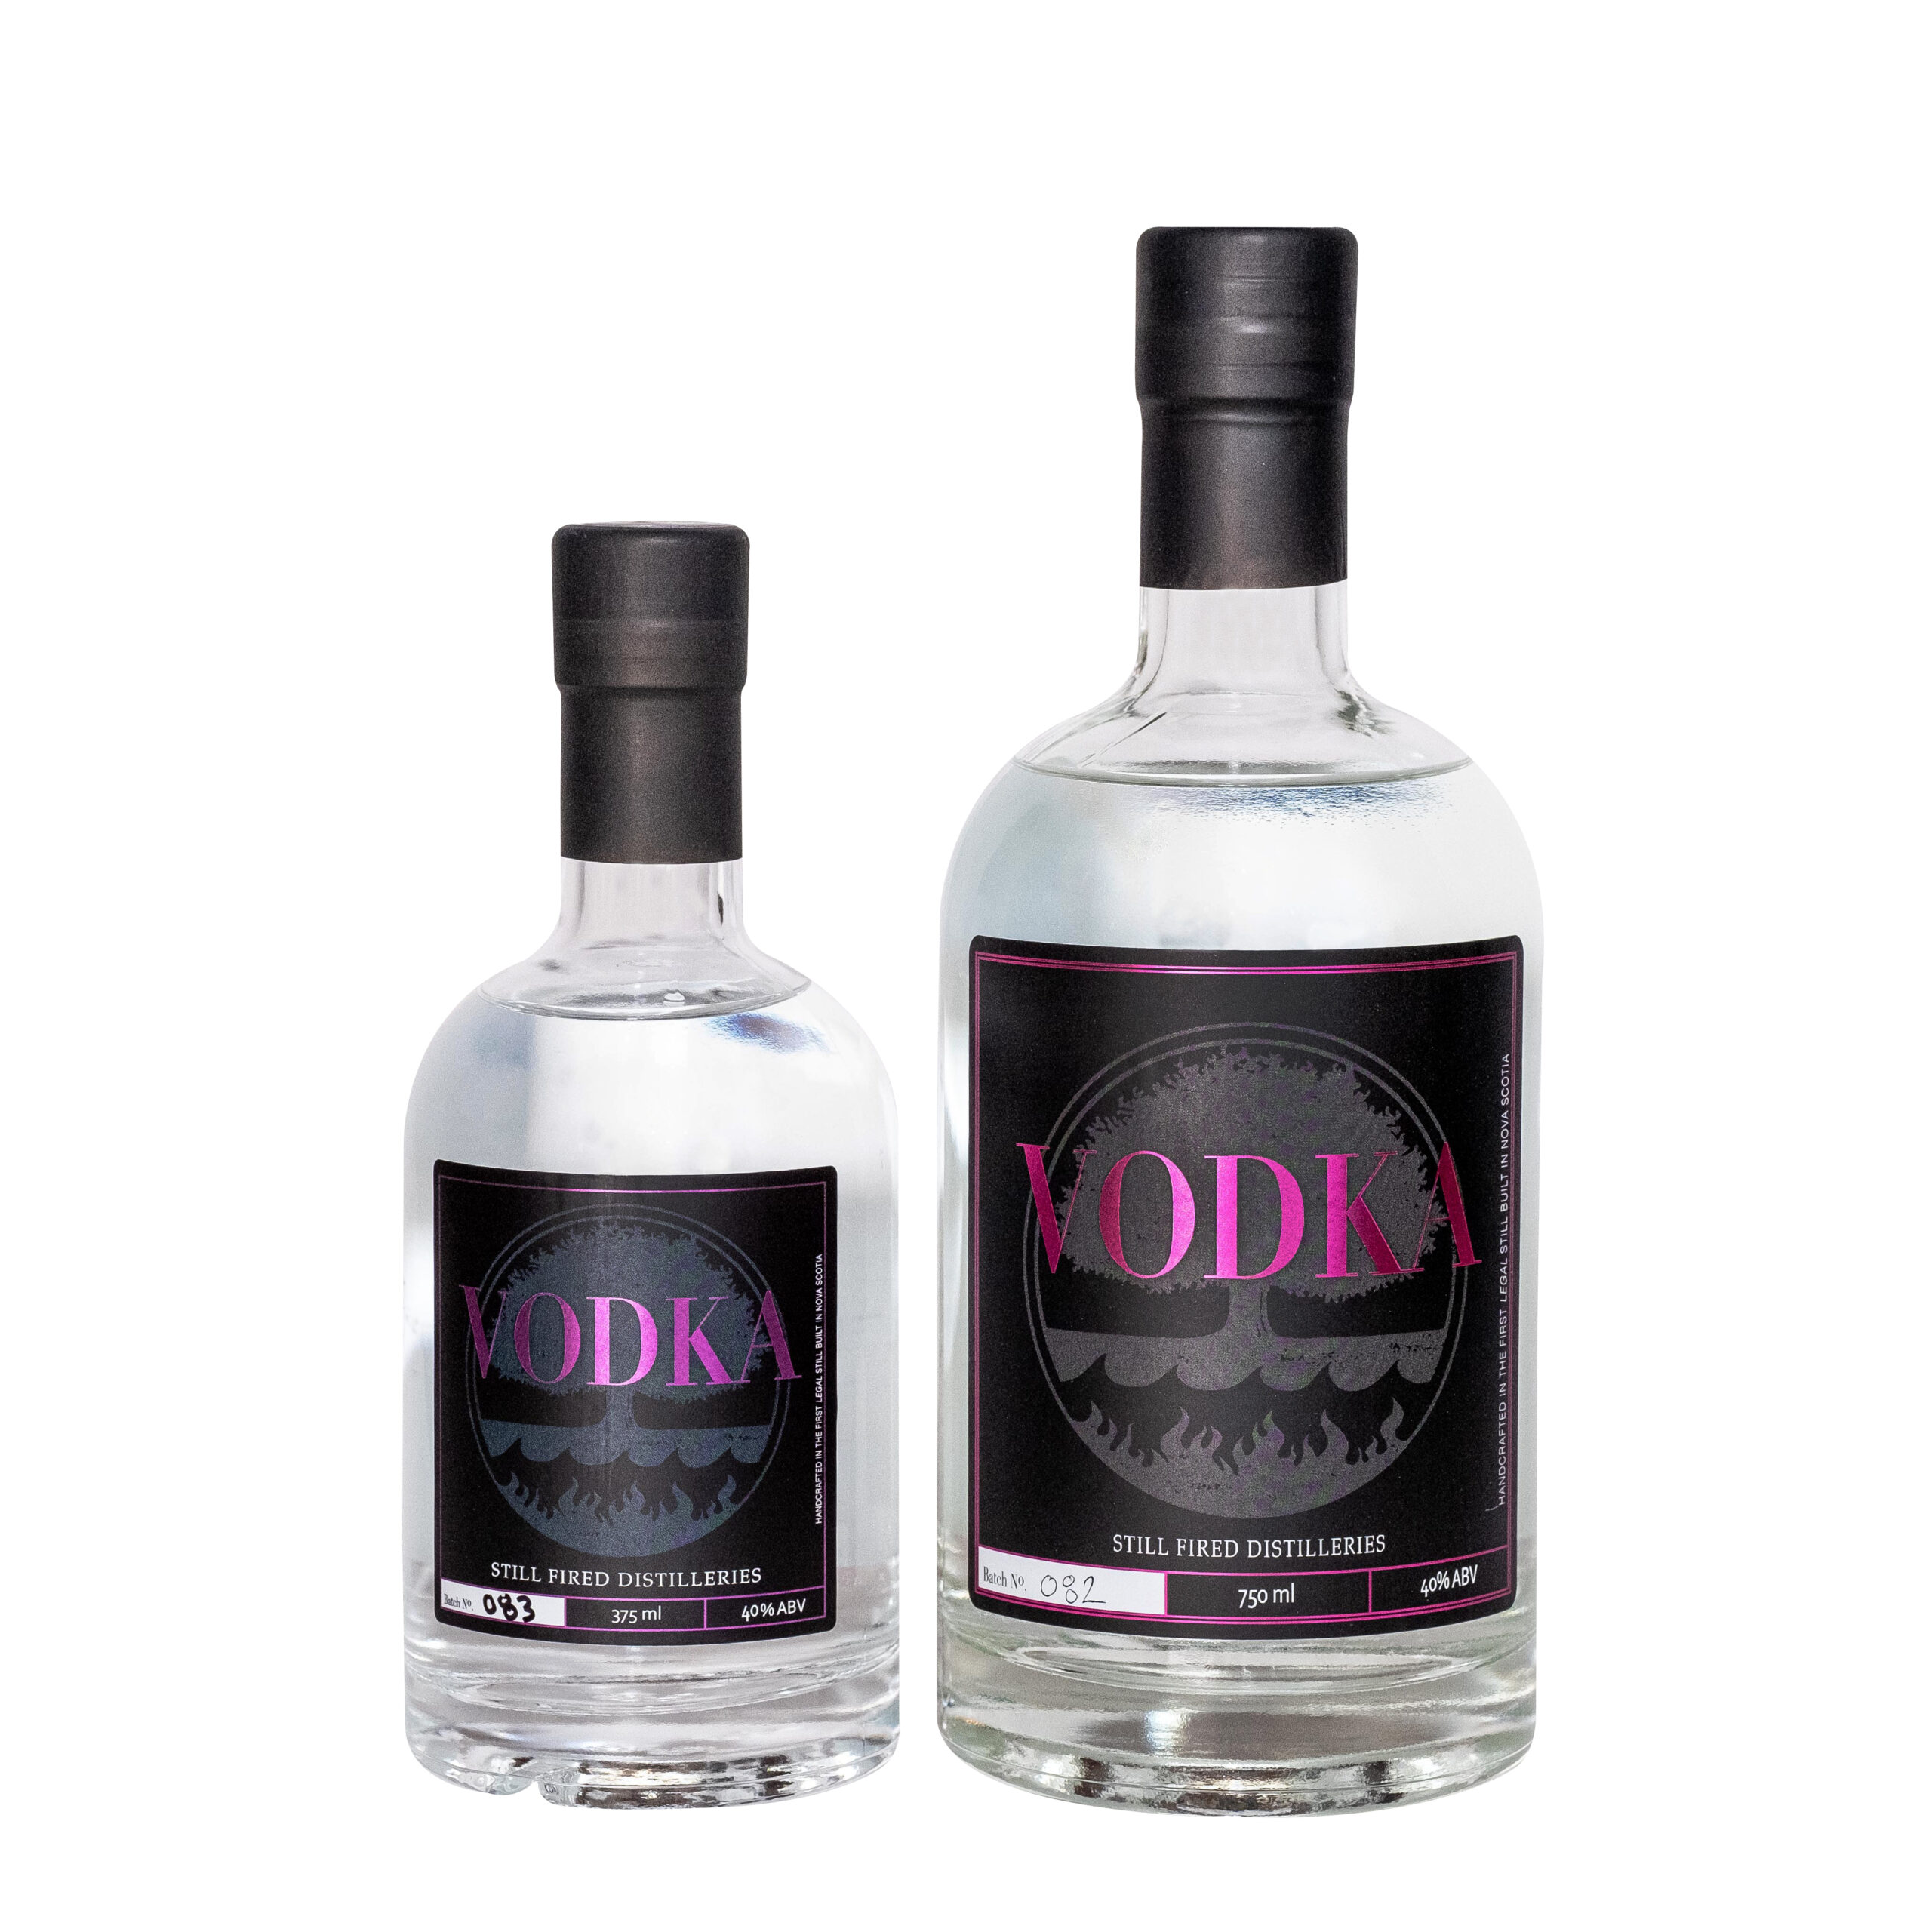 Vodka exceptionnelle spiked with a cognac: the latest premium spirit hybrid  